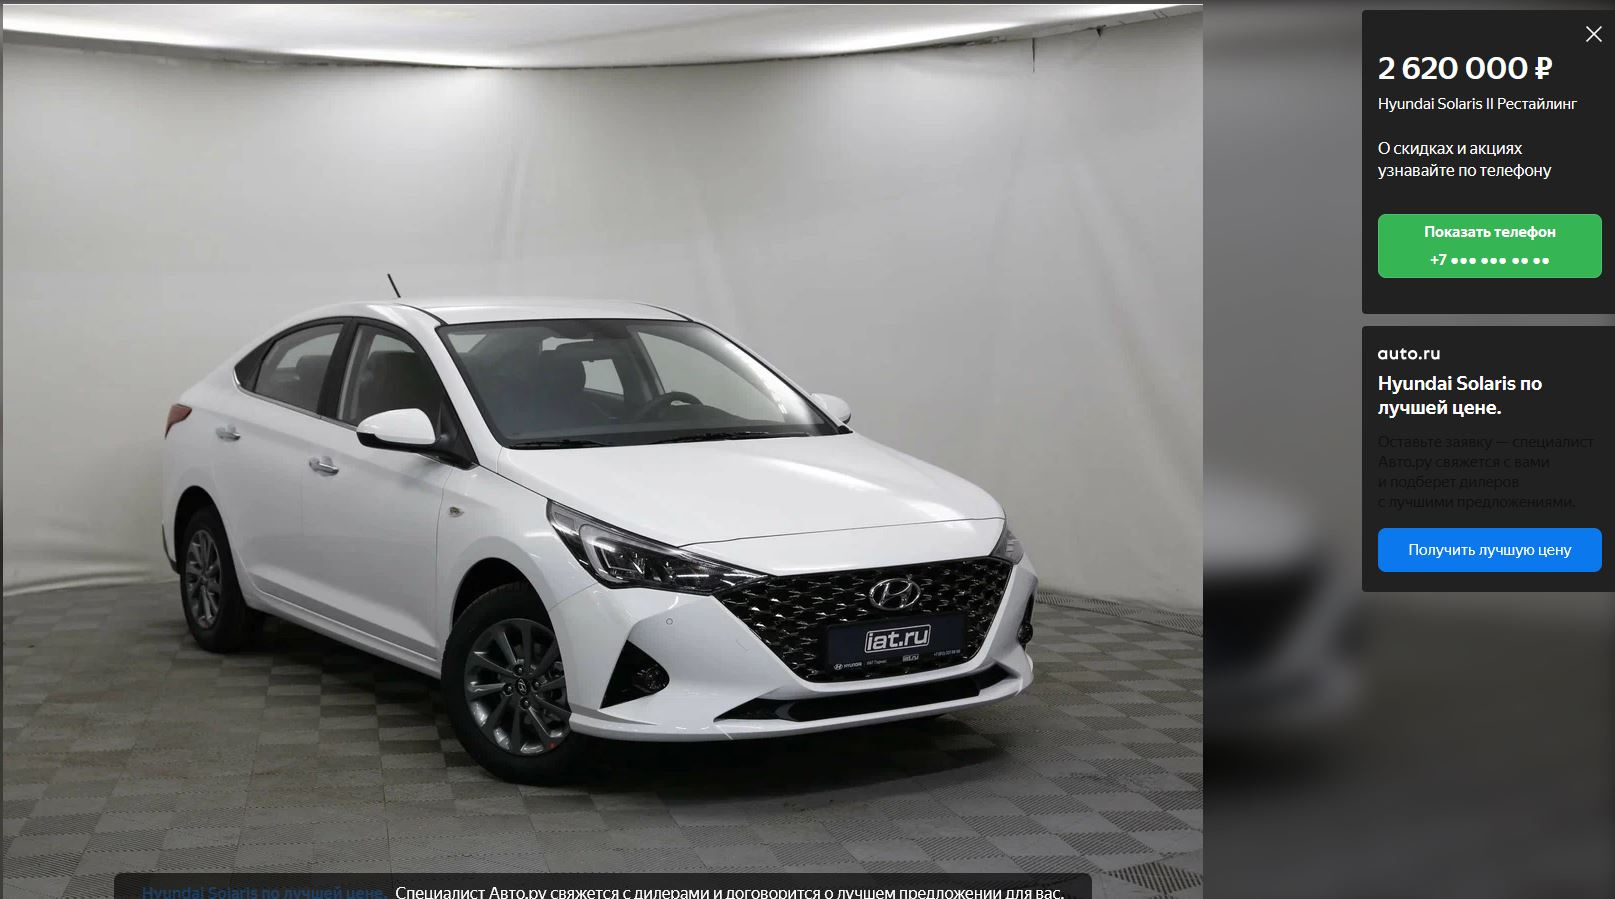 На сайтах объявлений  Hyundai Solaris продают по цене <a href="https://auto.ru/cars/hyundai/solaris/all/?price_from=2500000" class="_ io-leave-page" target="_blank">выше 2,5 млн рублей</a>